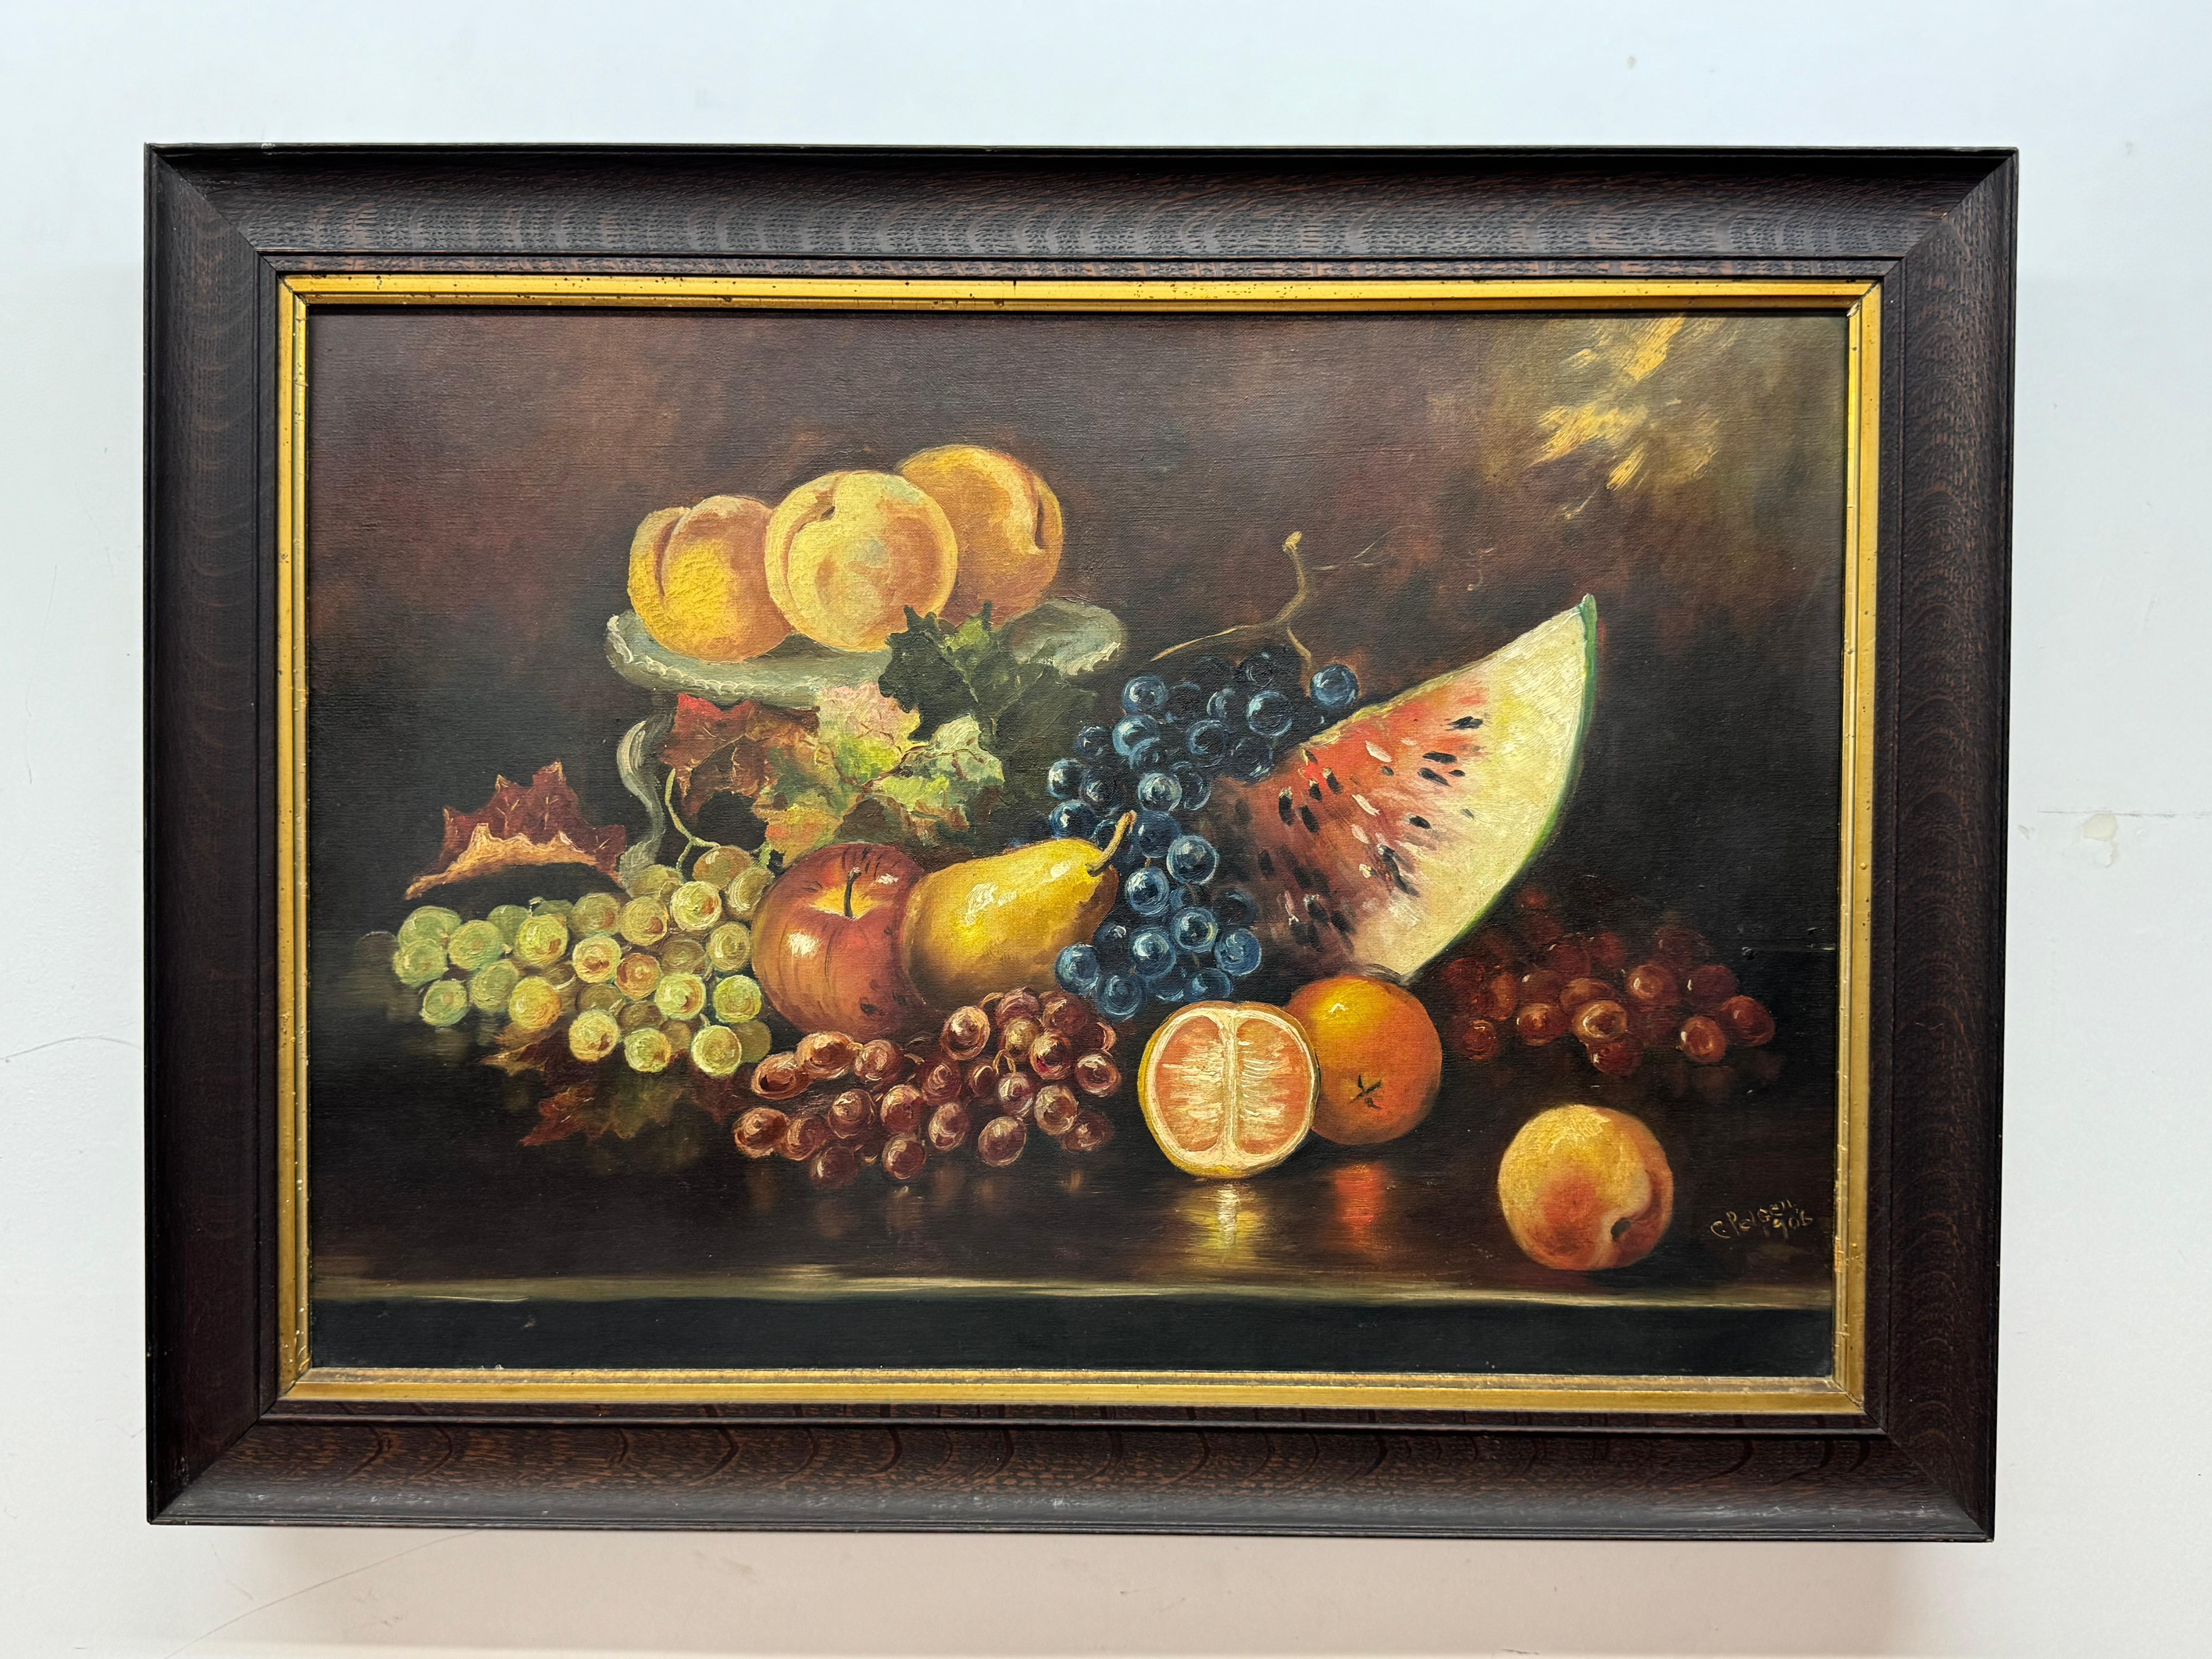 C. Pelgen early 20th century fruit still life painting, 1906

Oil on canvas in Frame.

18 x 26 unframed, 22.75 x 30.5 framed